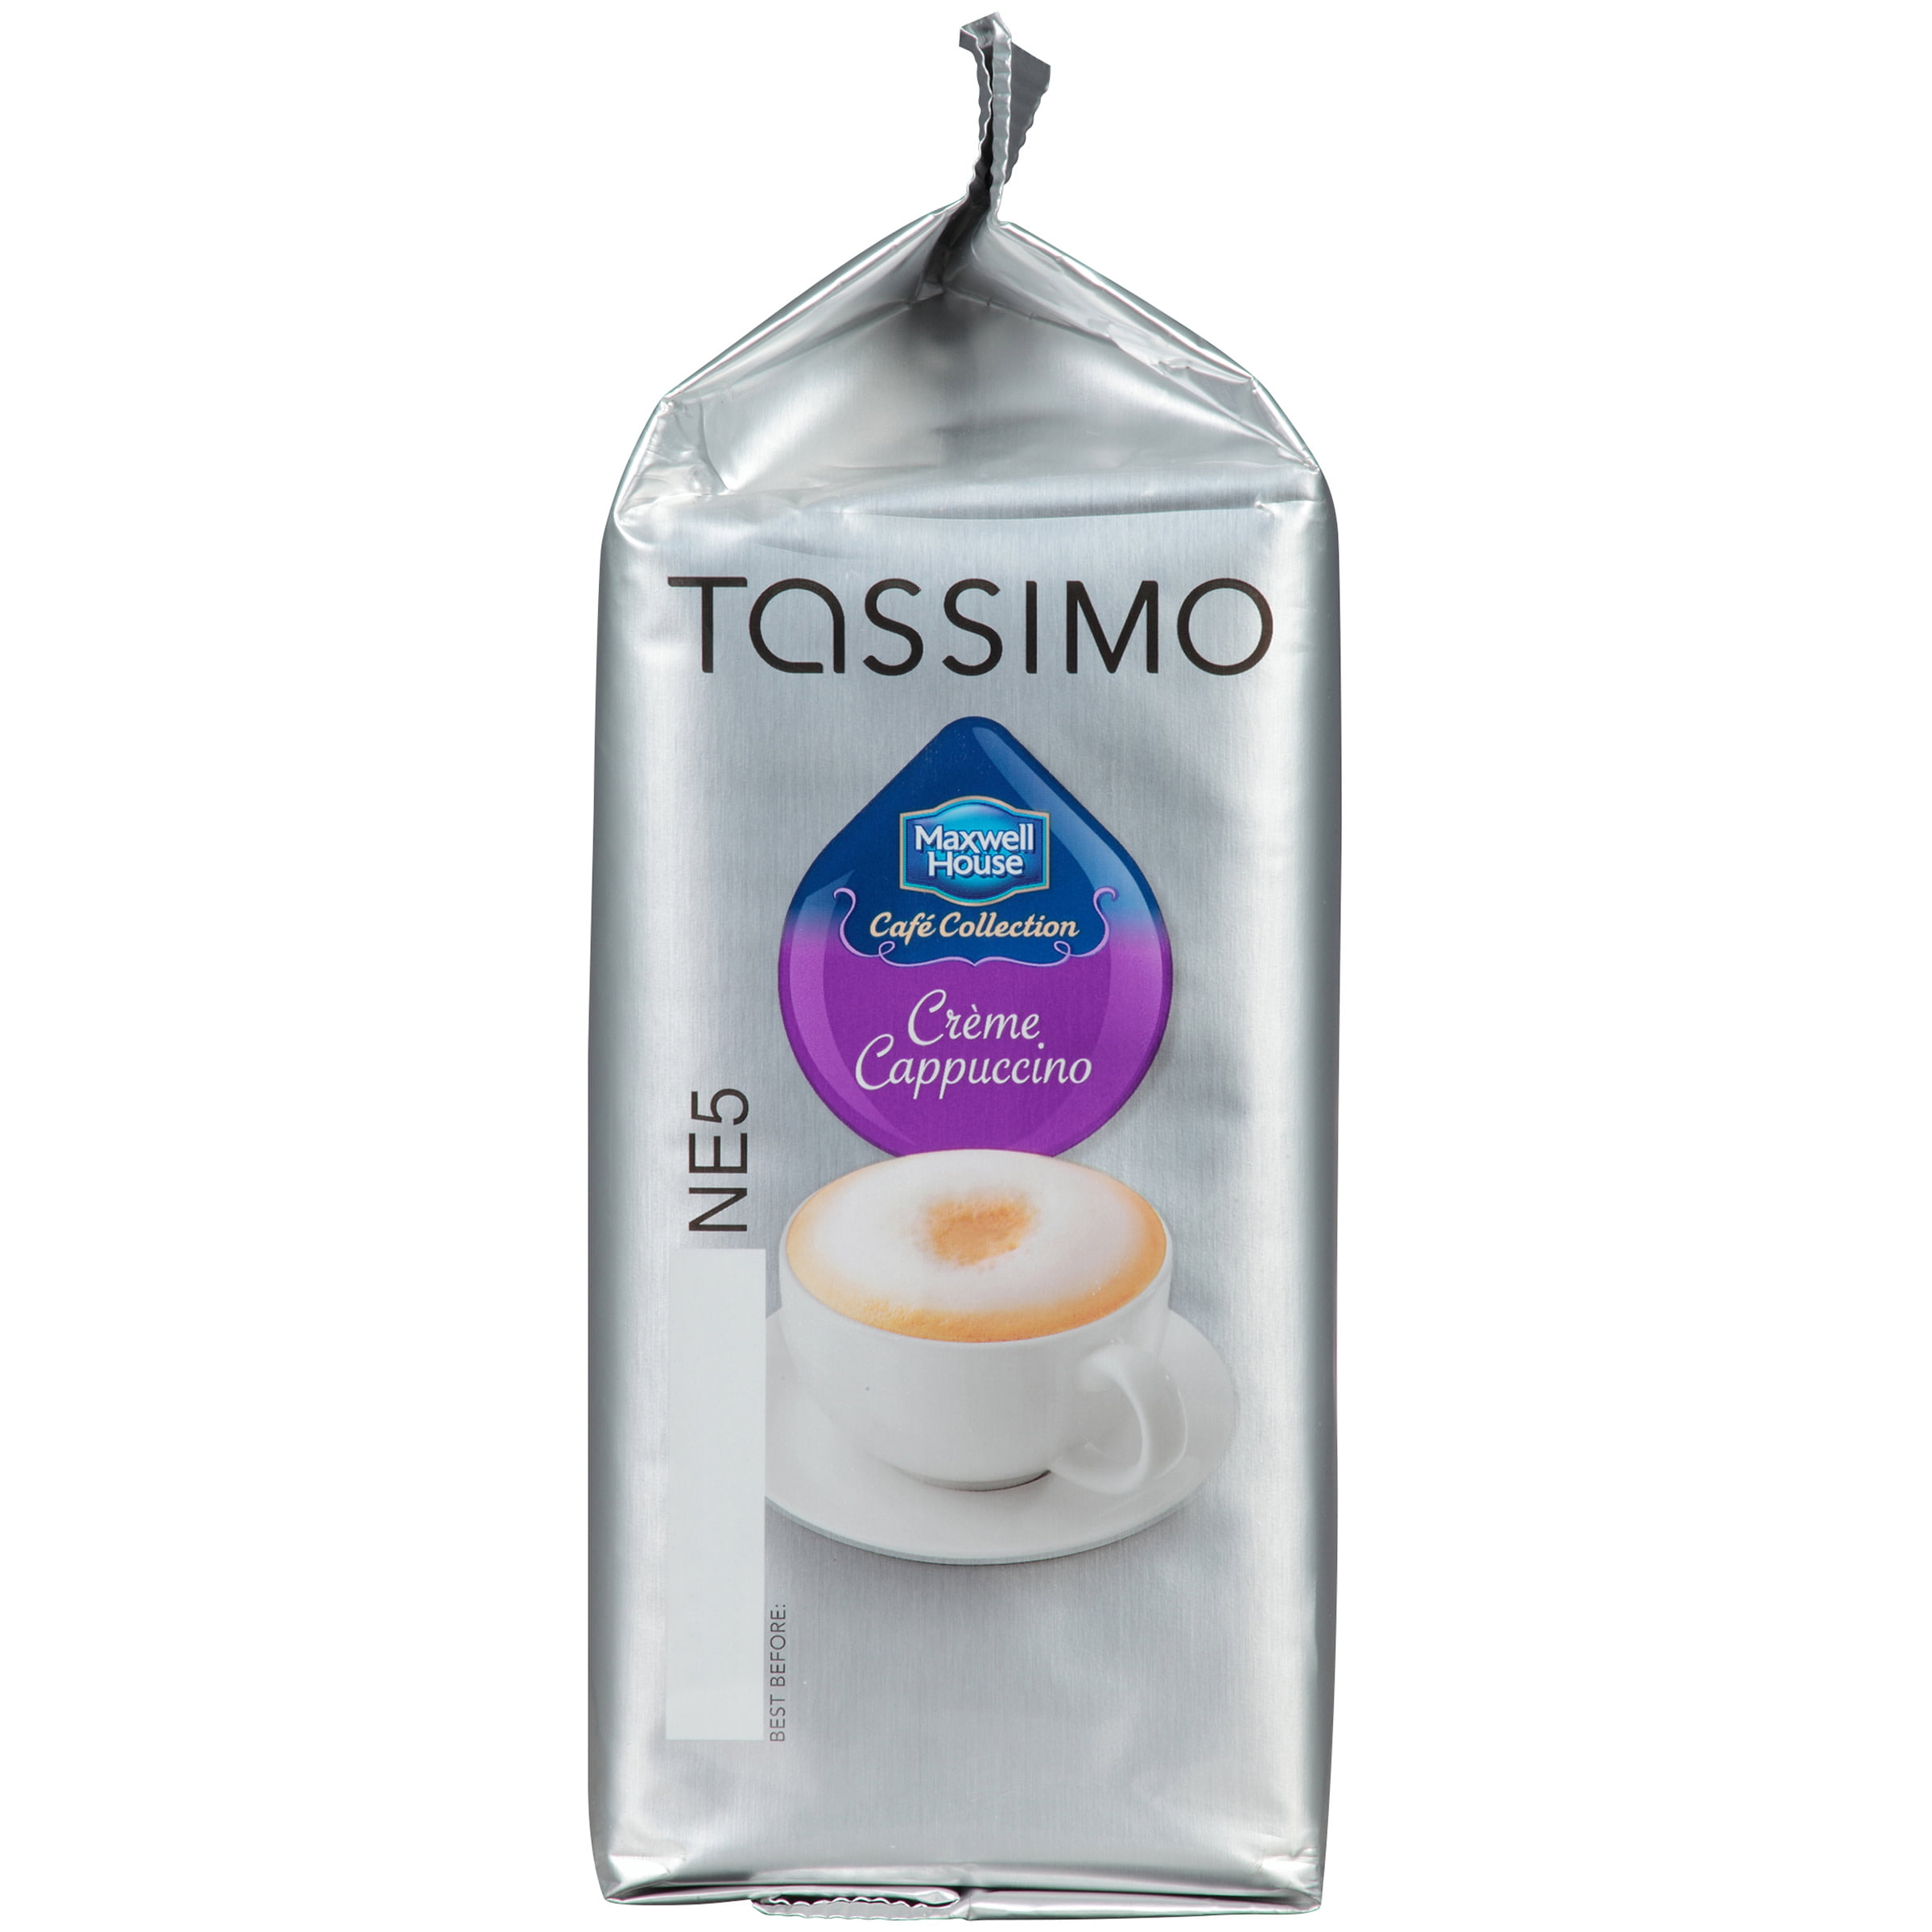 Tassimo Maxwell House Cappuccino choco 208g (8 dosettes) - les 5